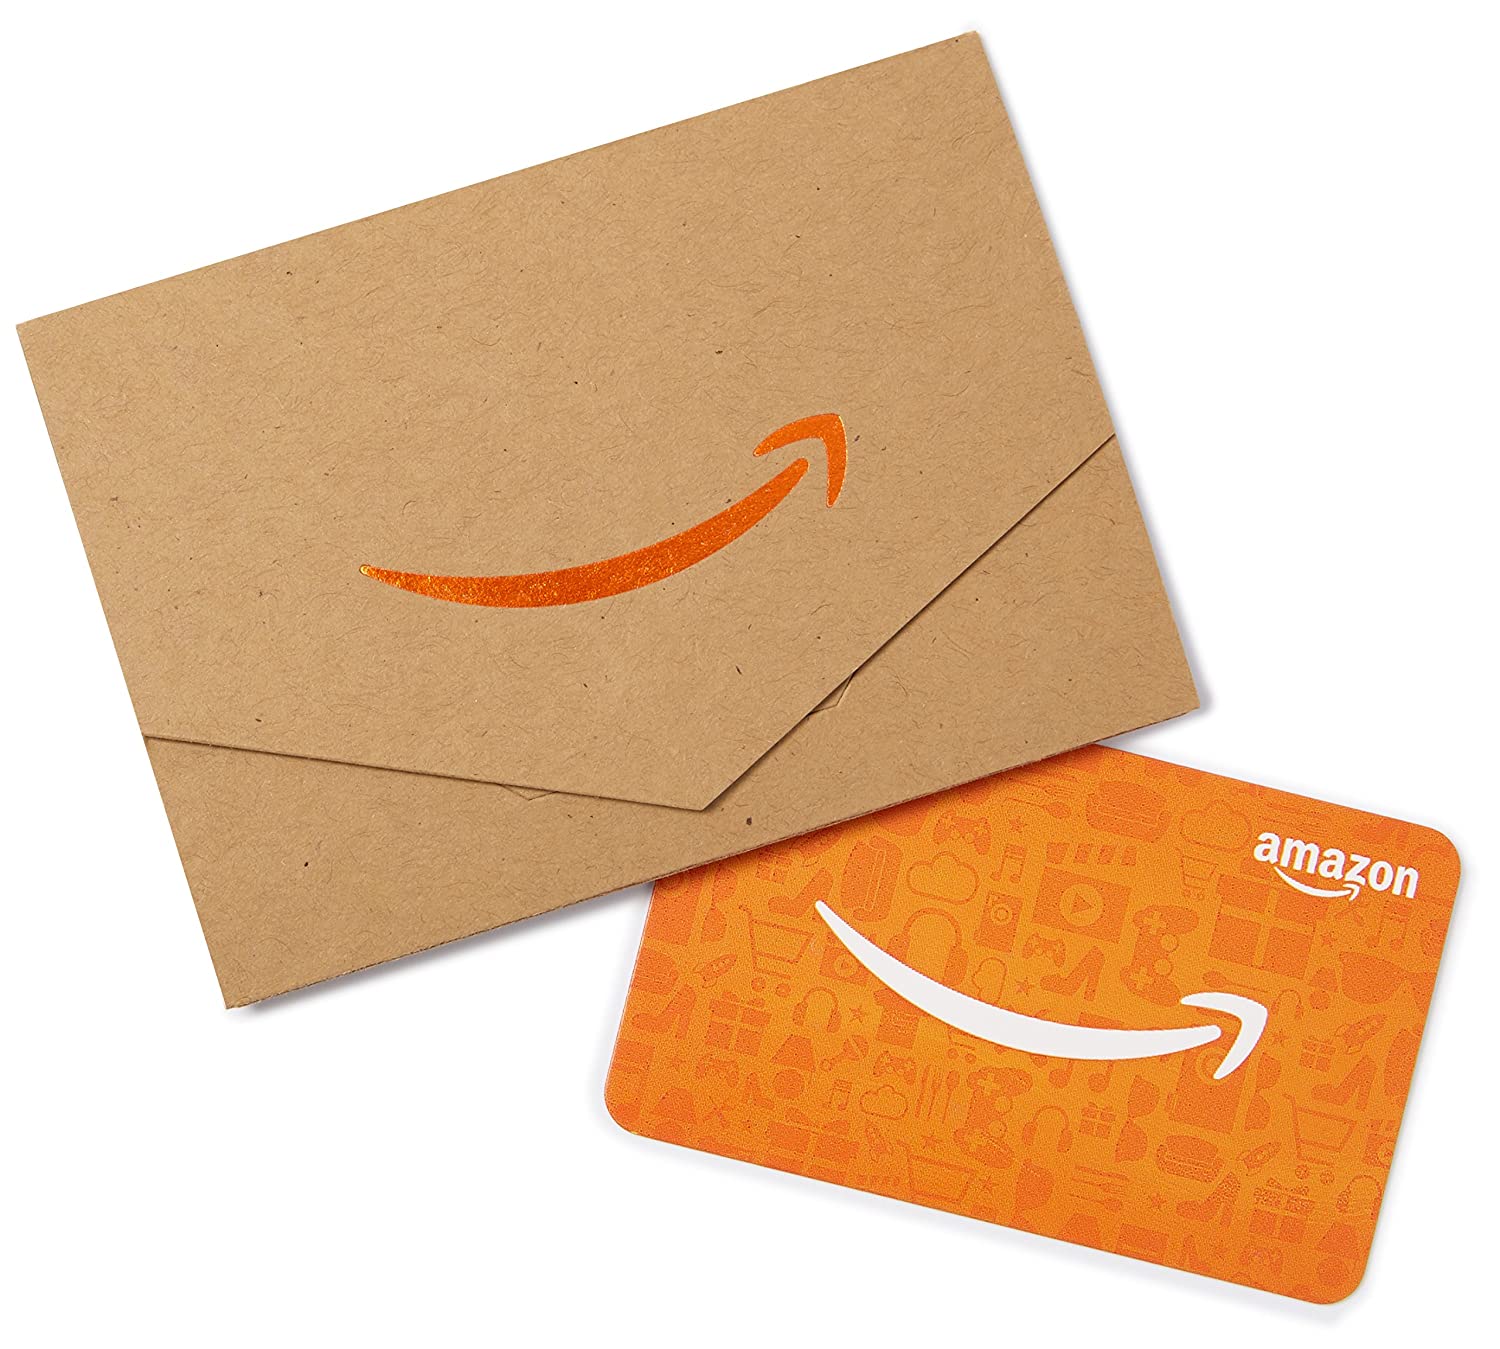 Amazon.com Gift Card in a Mini Envelope